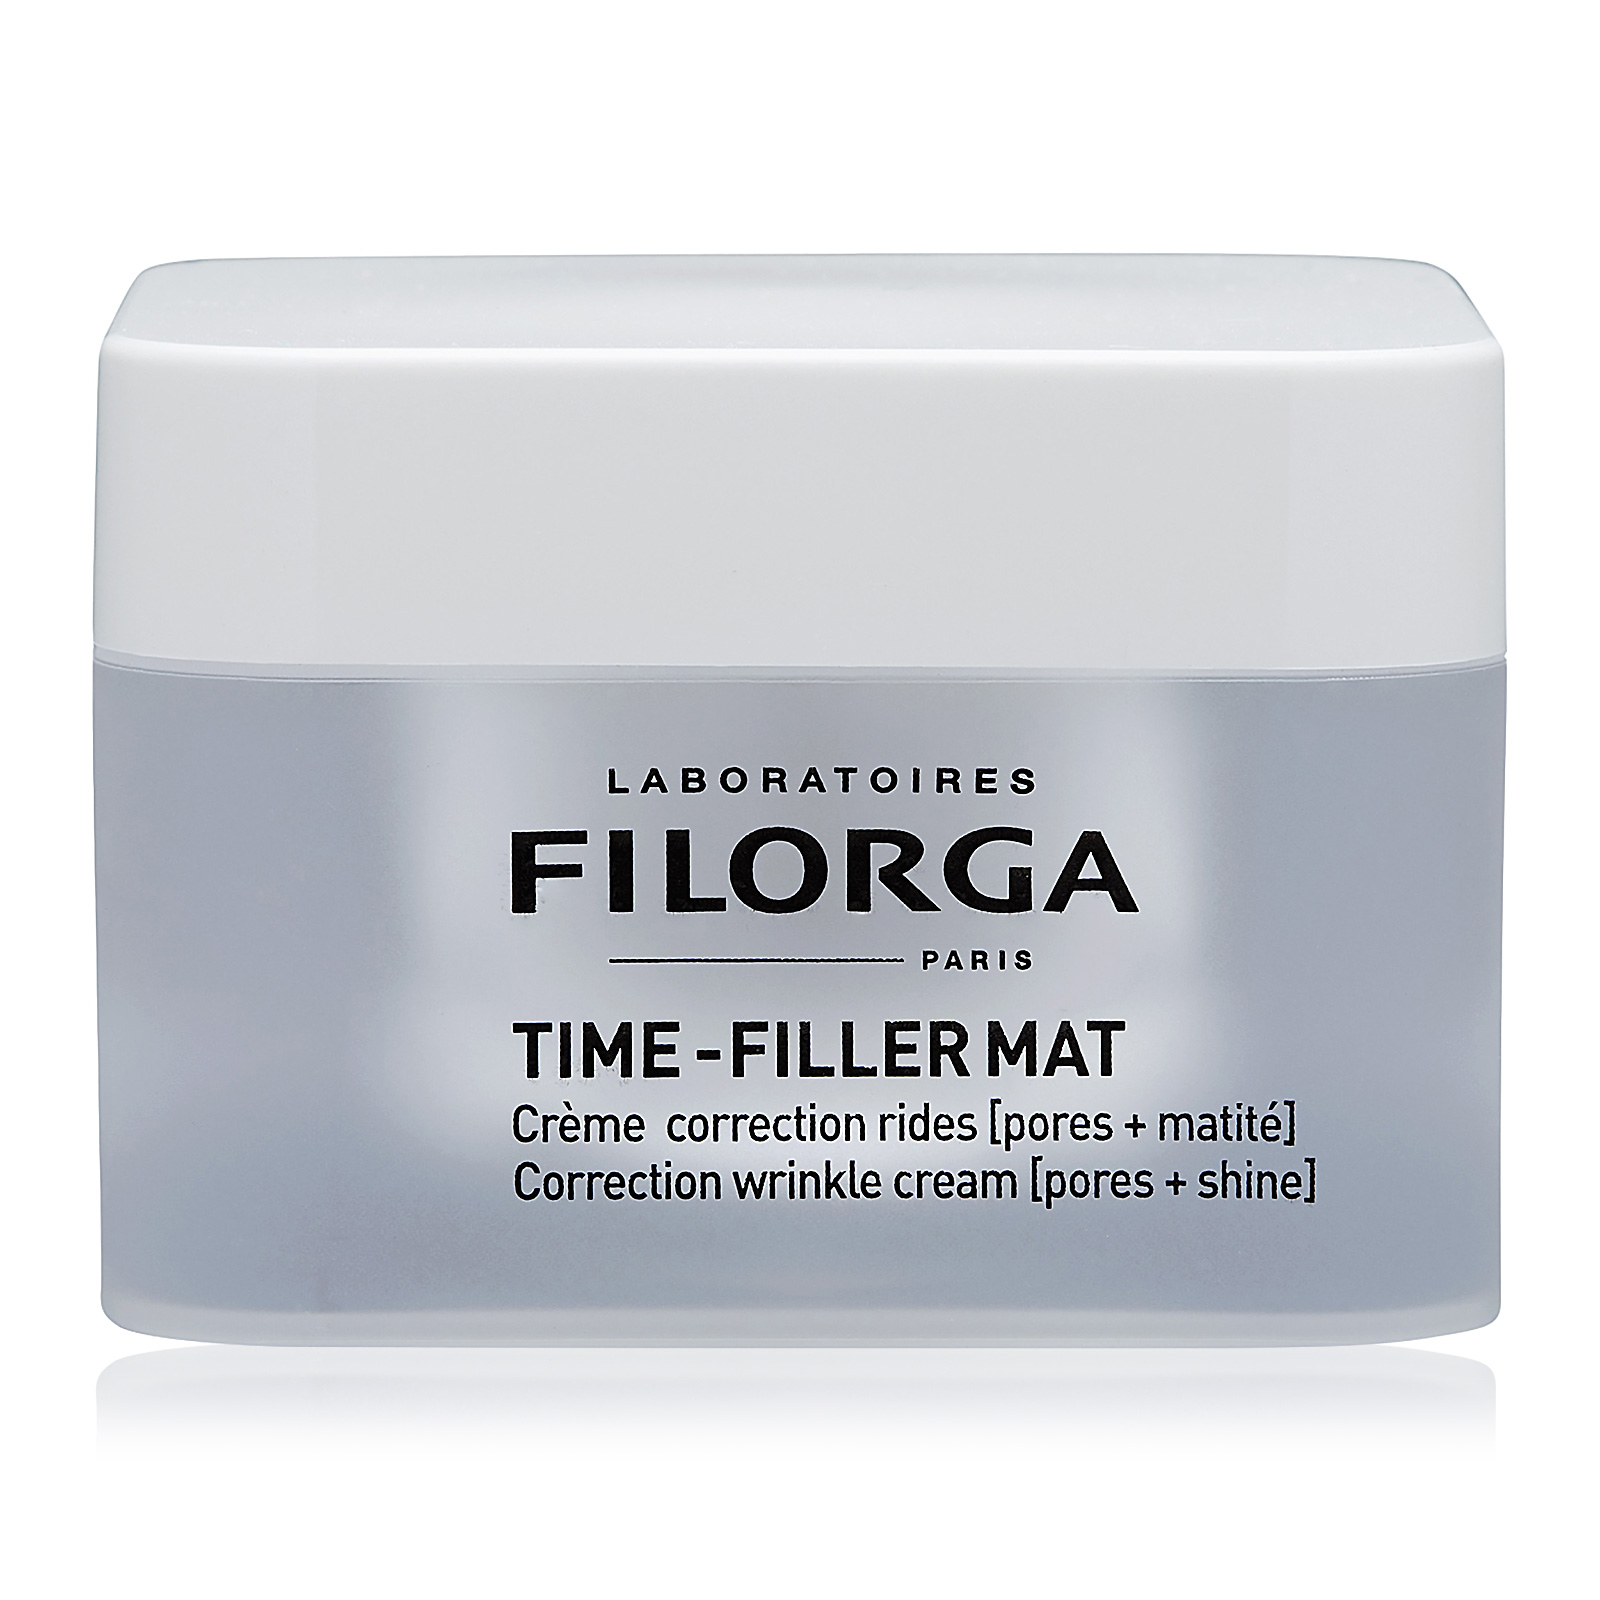 Time-Filler Mat Correction Wrinkle Cream [Pores + Shine]